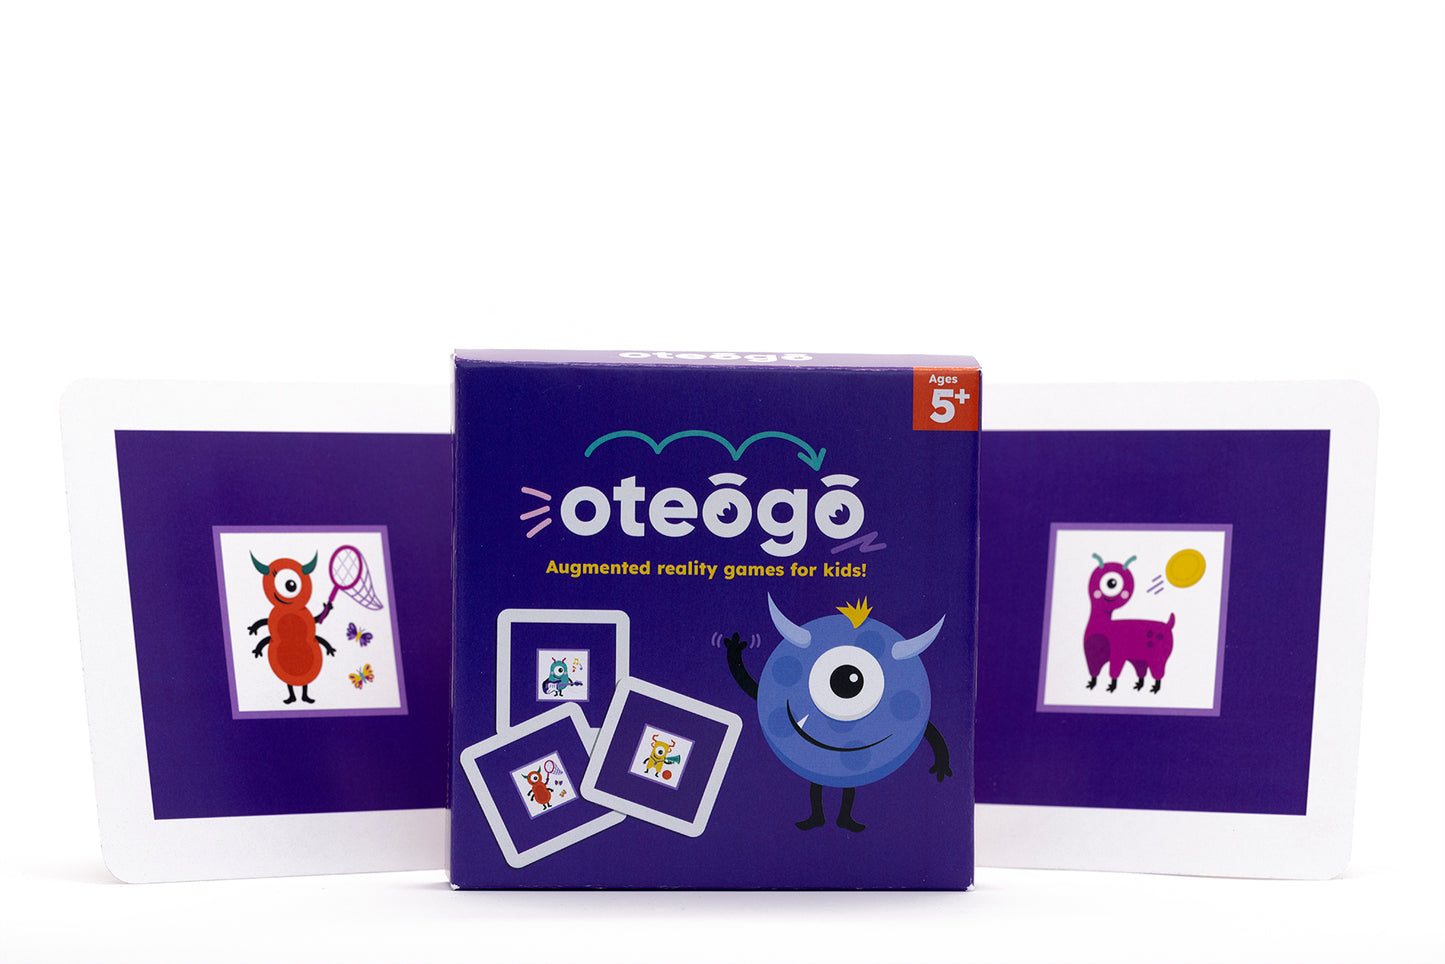 Oteogo Package